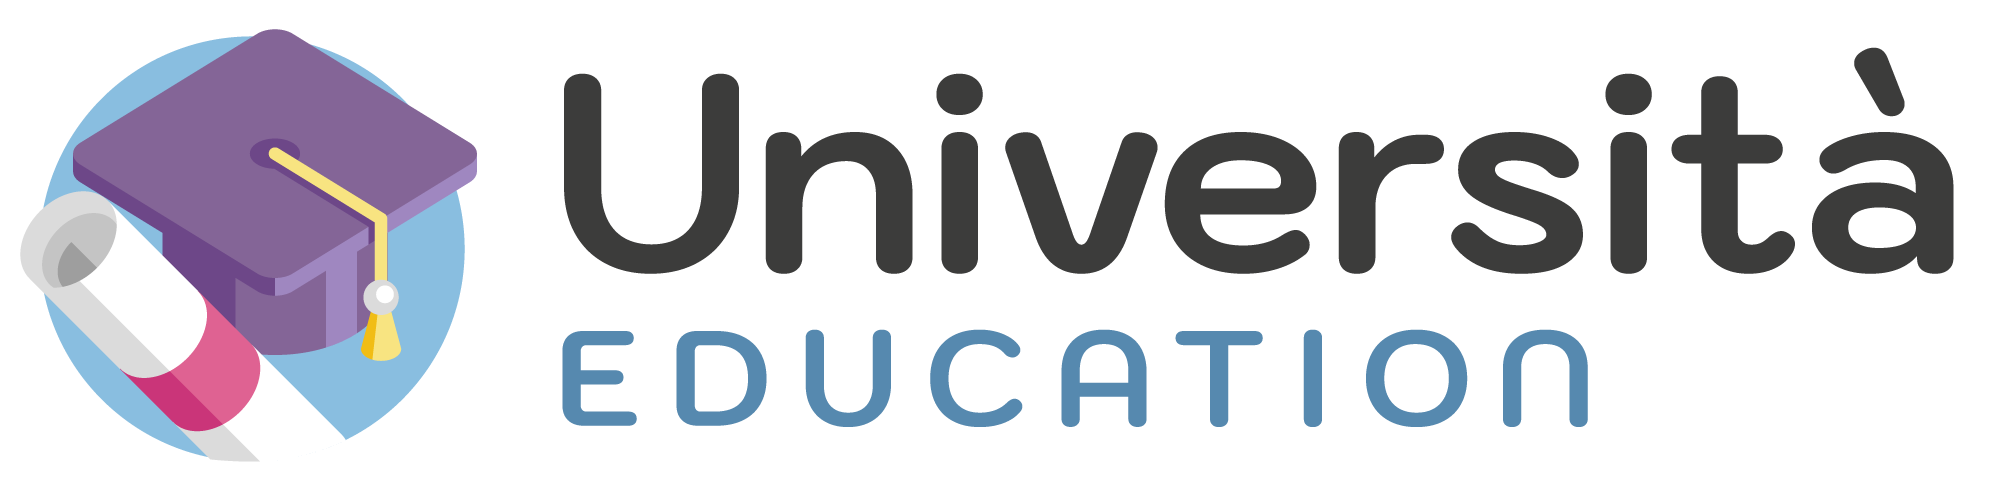 Università Education Logo